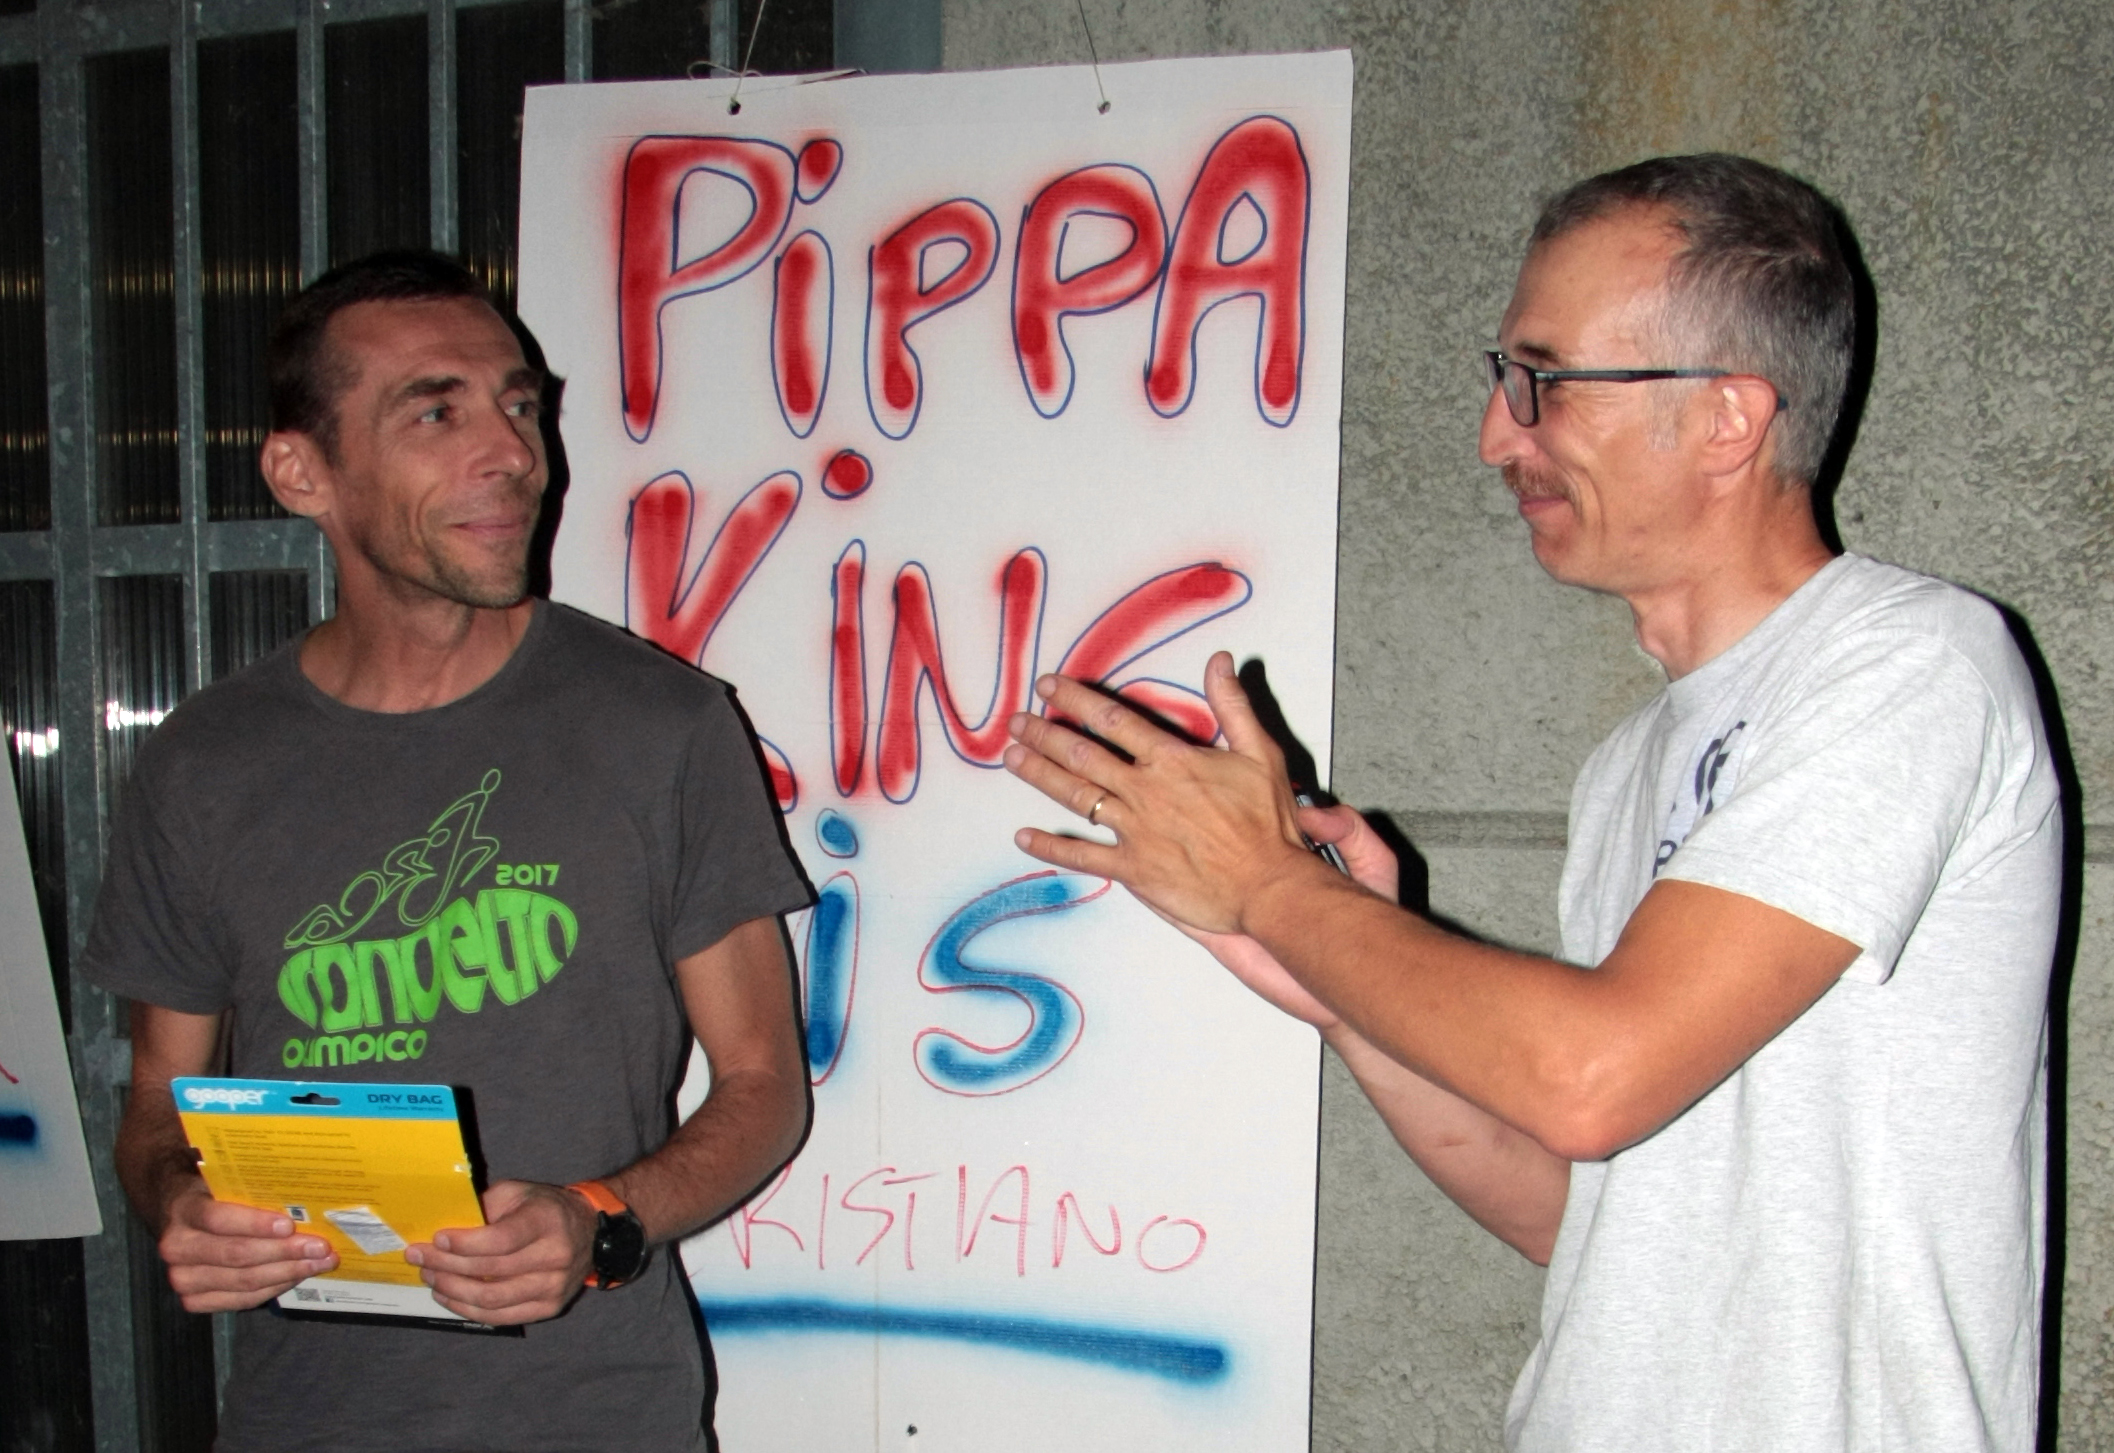 King_pippa_5_Cristiano_Pippa_King.jpg